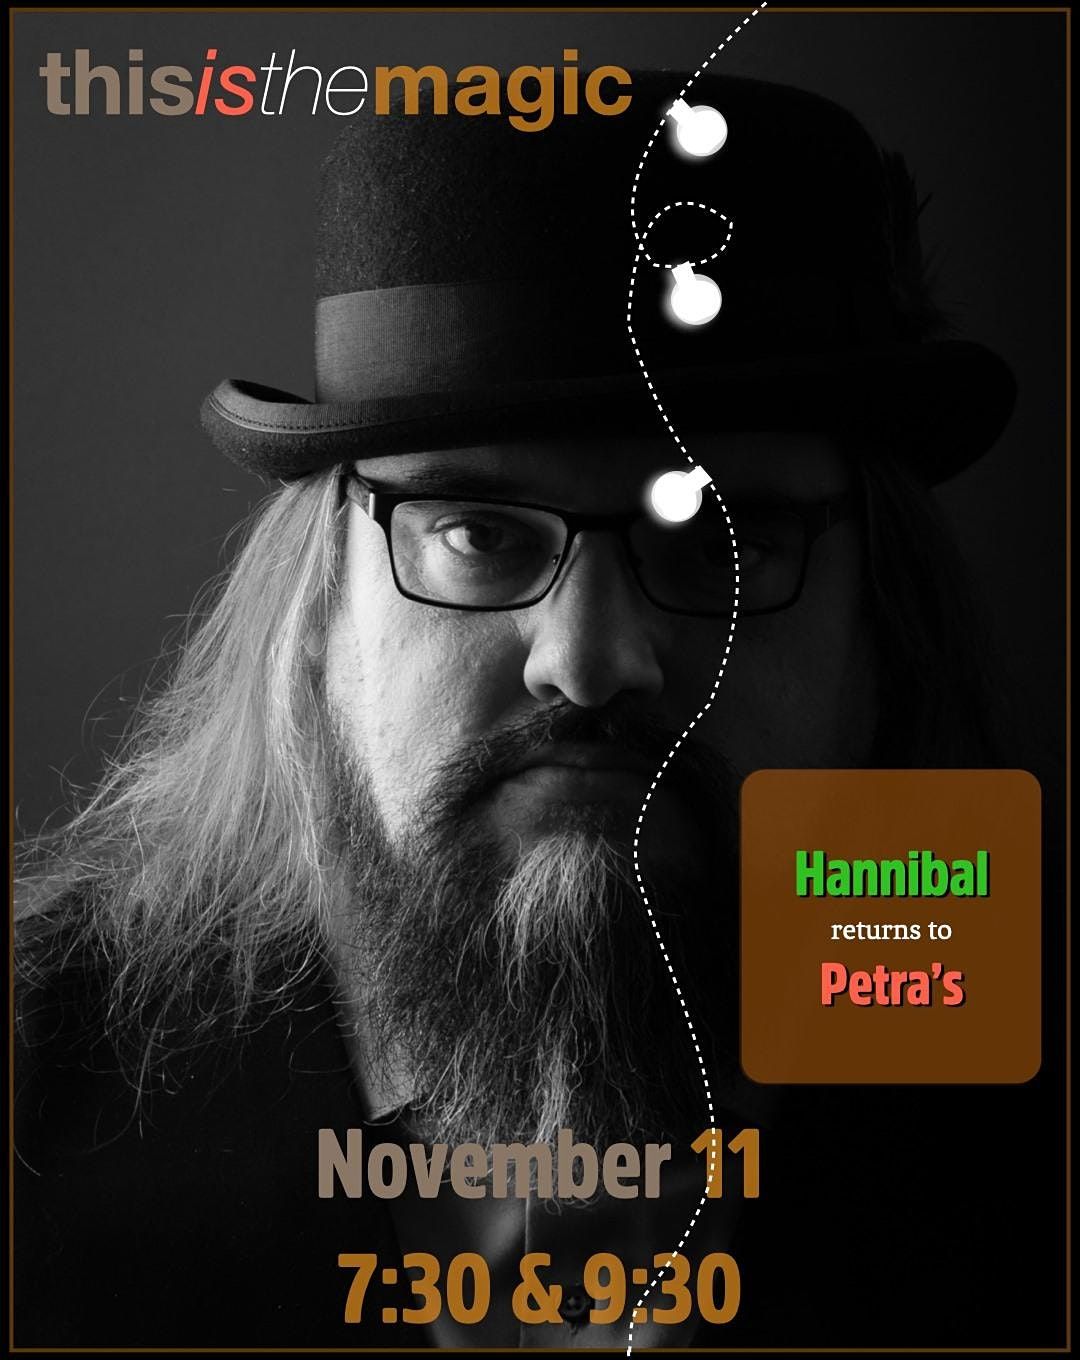 Hannibal Live at Petra's!